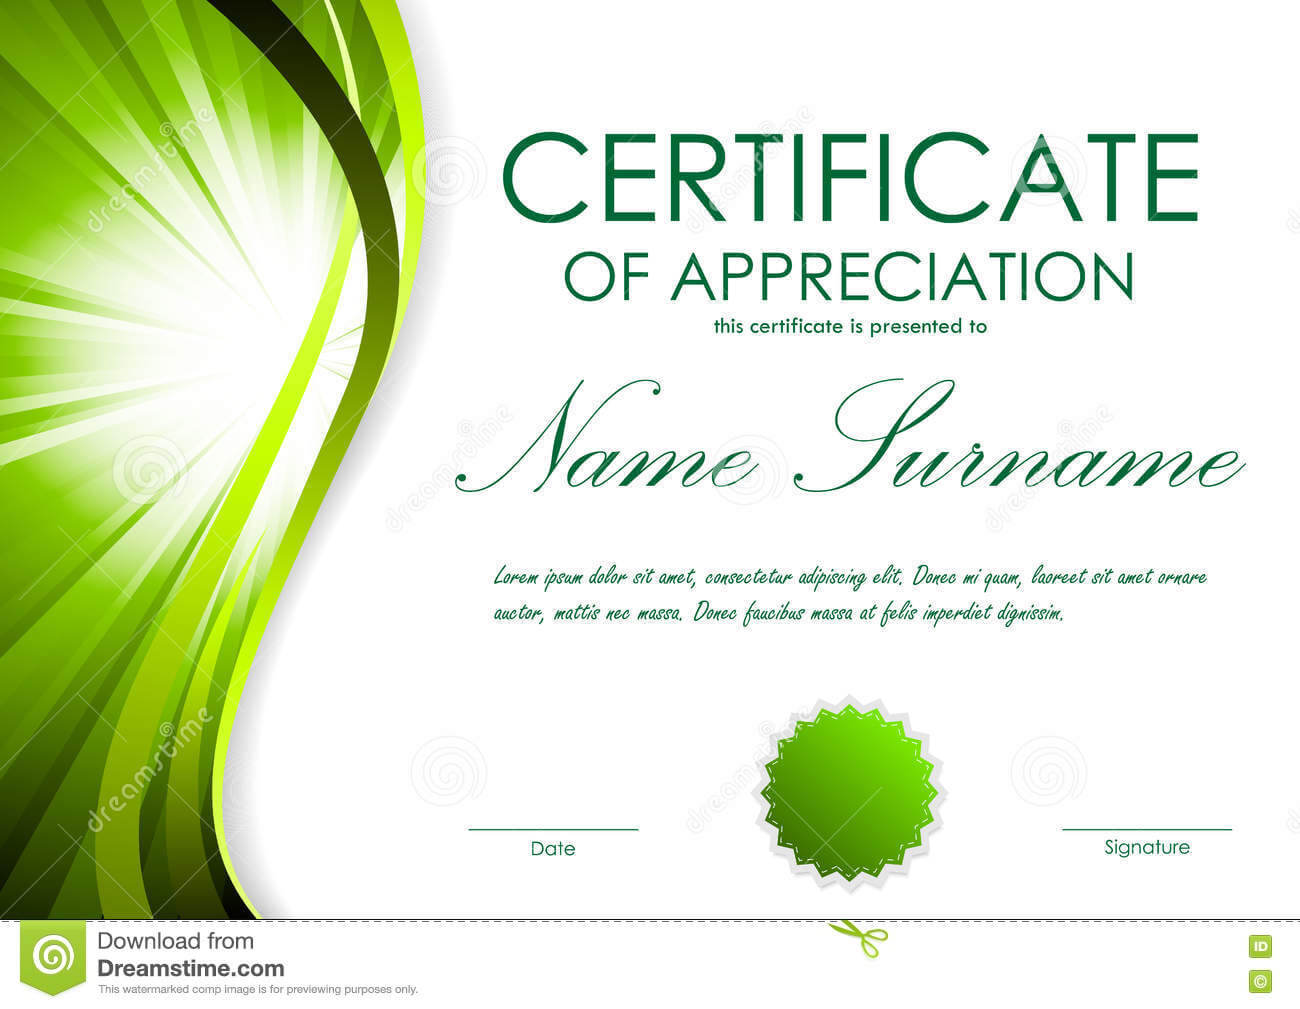 Certificate Of Appreciation Template Stock Vector Inside Free Certificate Of Appreciation Template Downloads